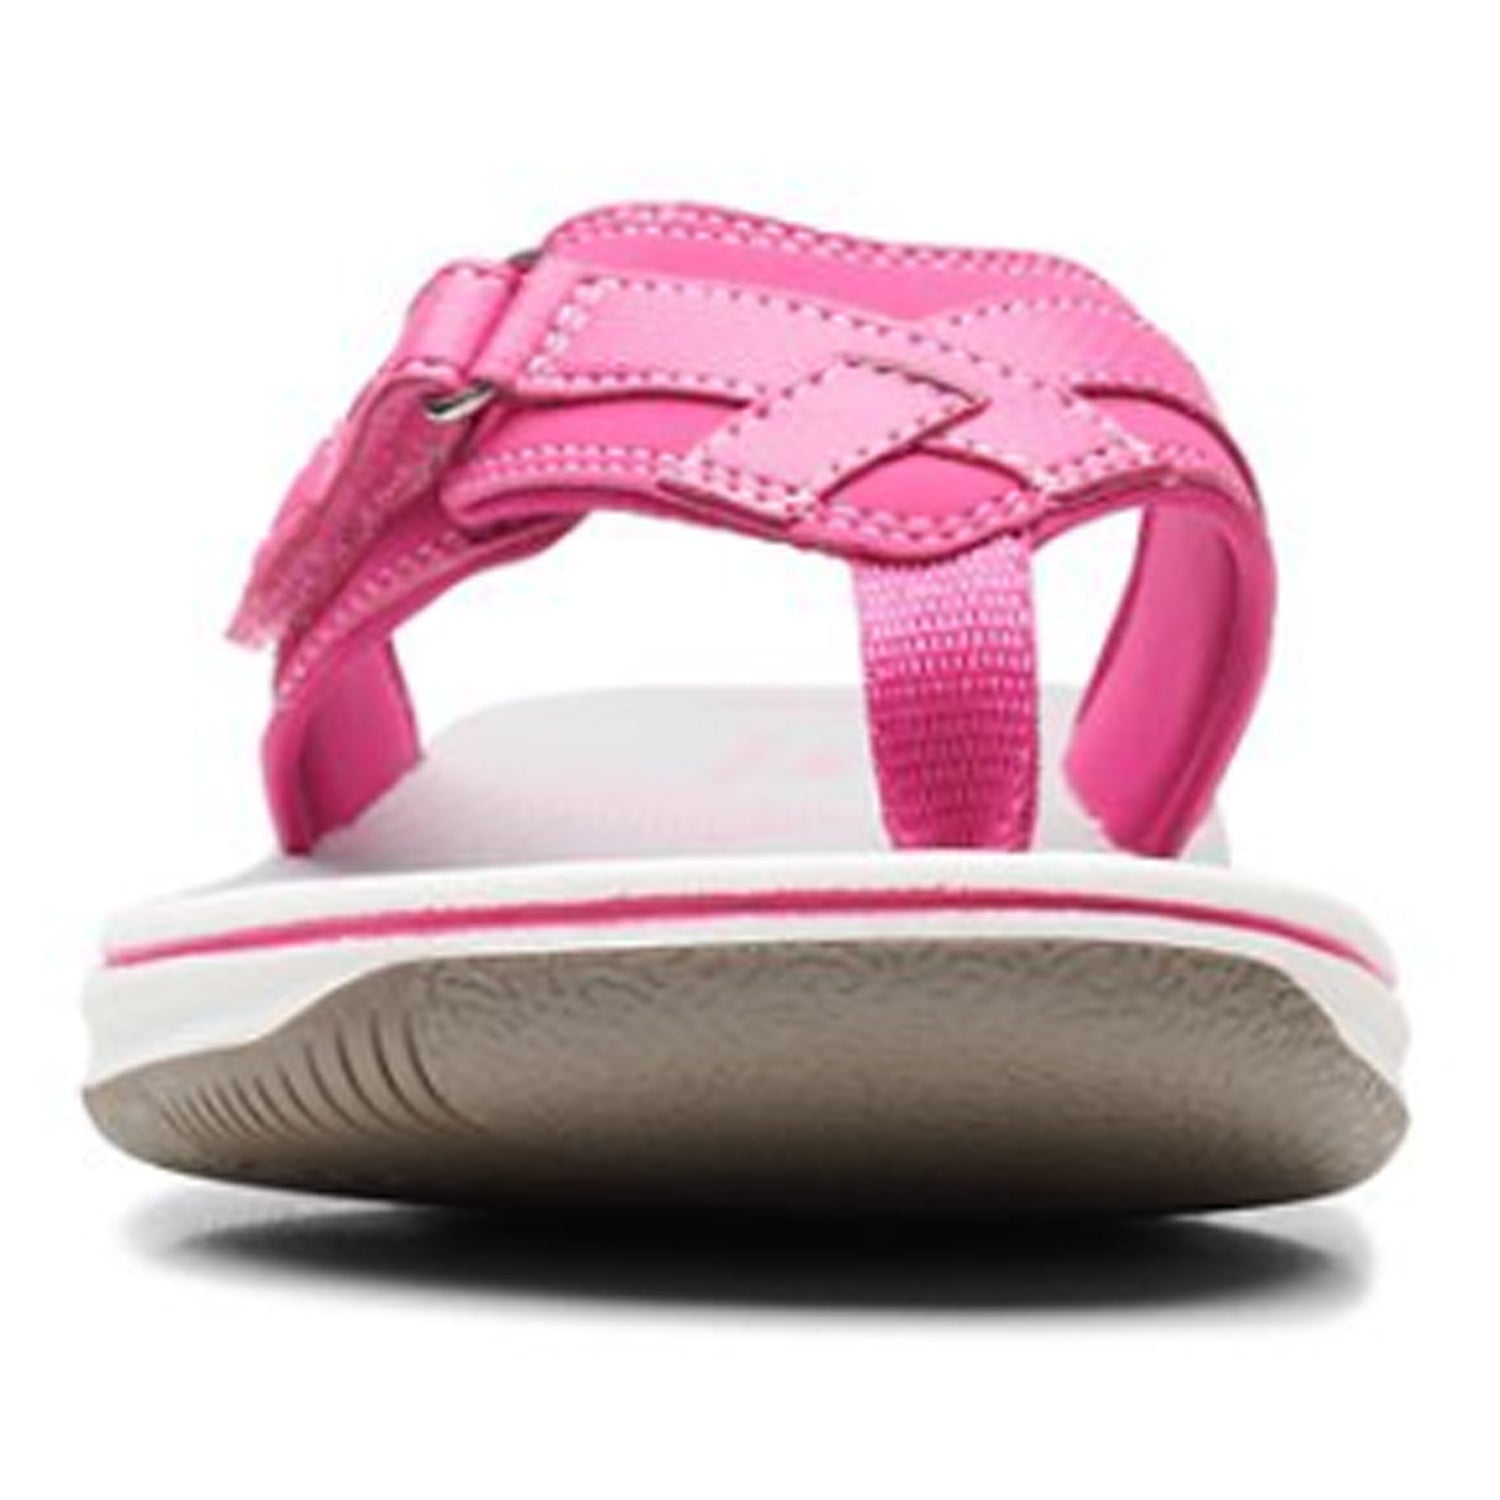 Peltz Shoes  Women's Clarks Breeze Sea Sandal FUSCHIA 26169818